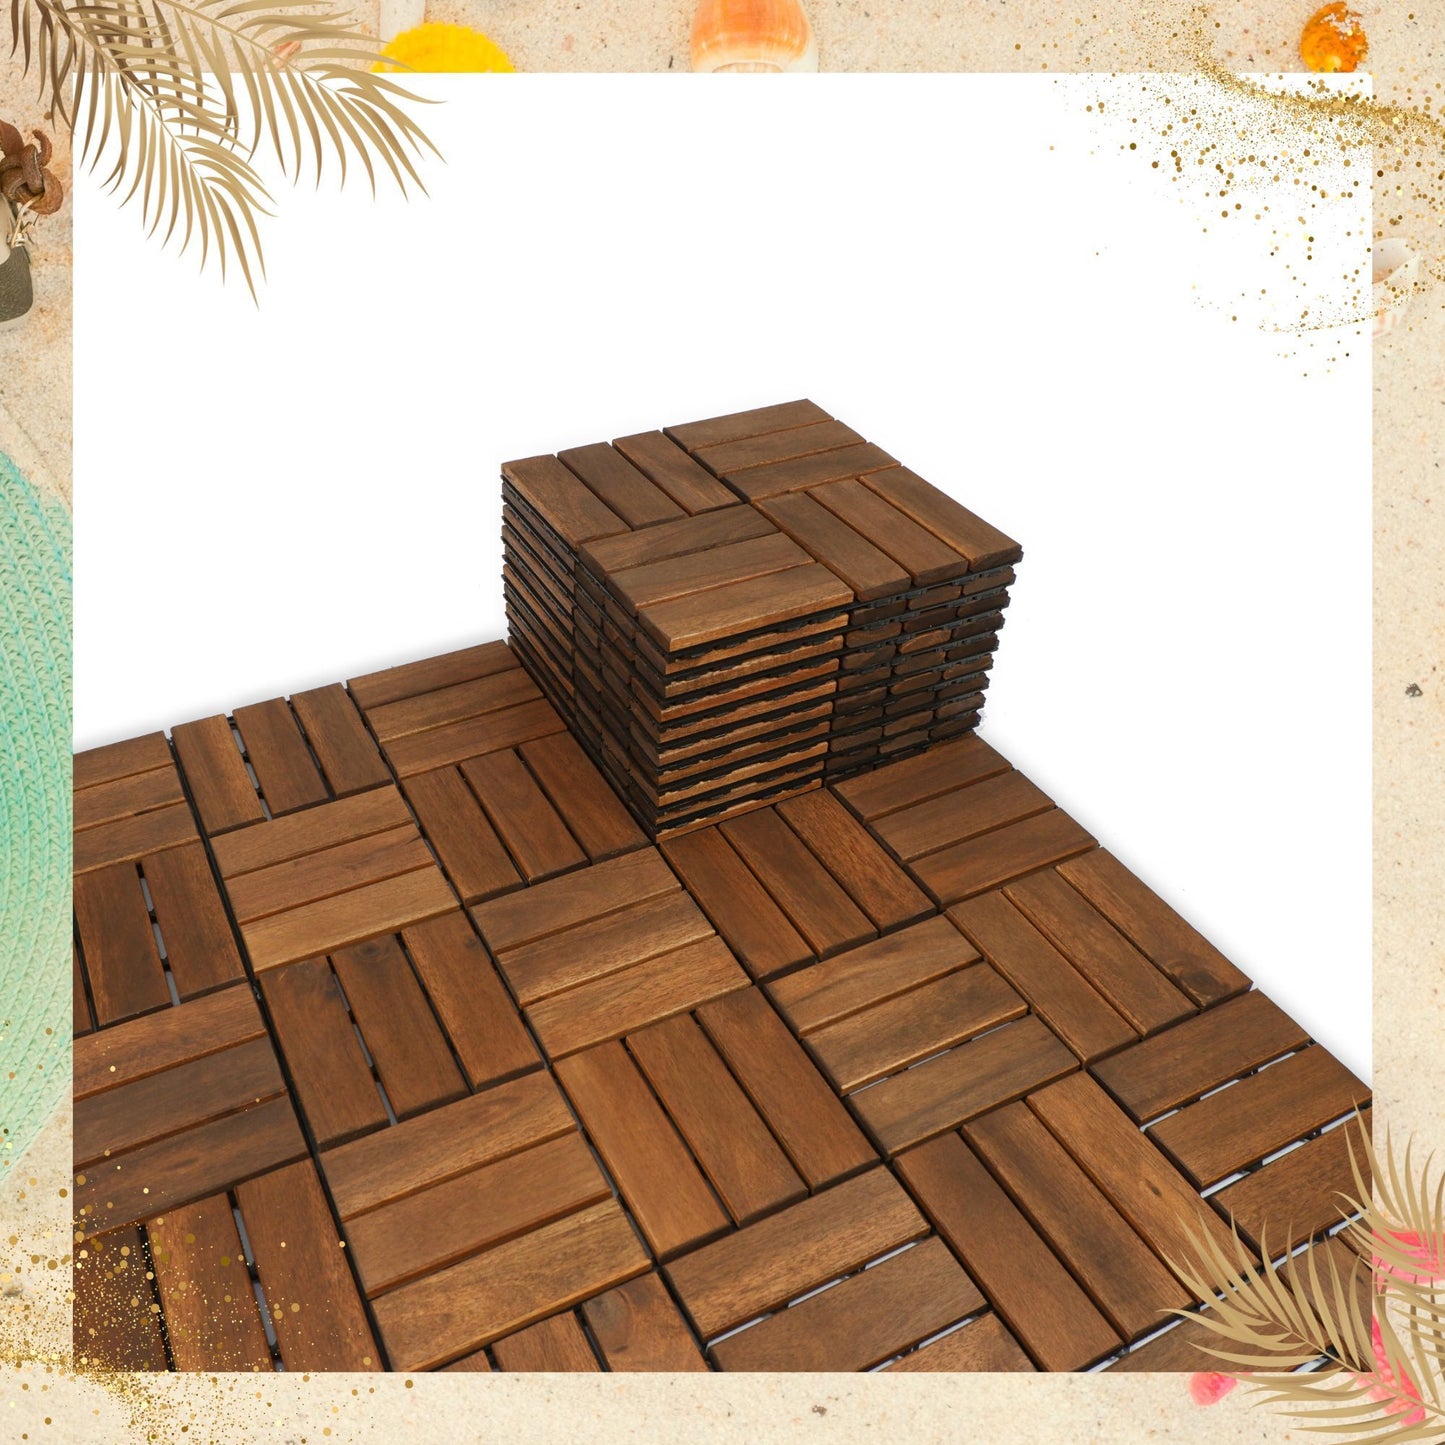 12" x 12" Square Acacia Wood Interlocking Flooring Tiles Checker Pattern Pack of 10 Tiles